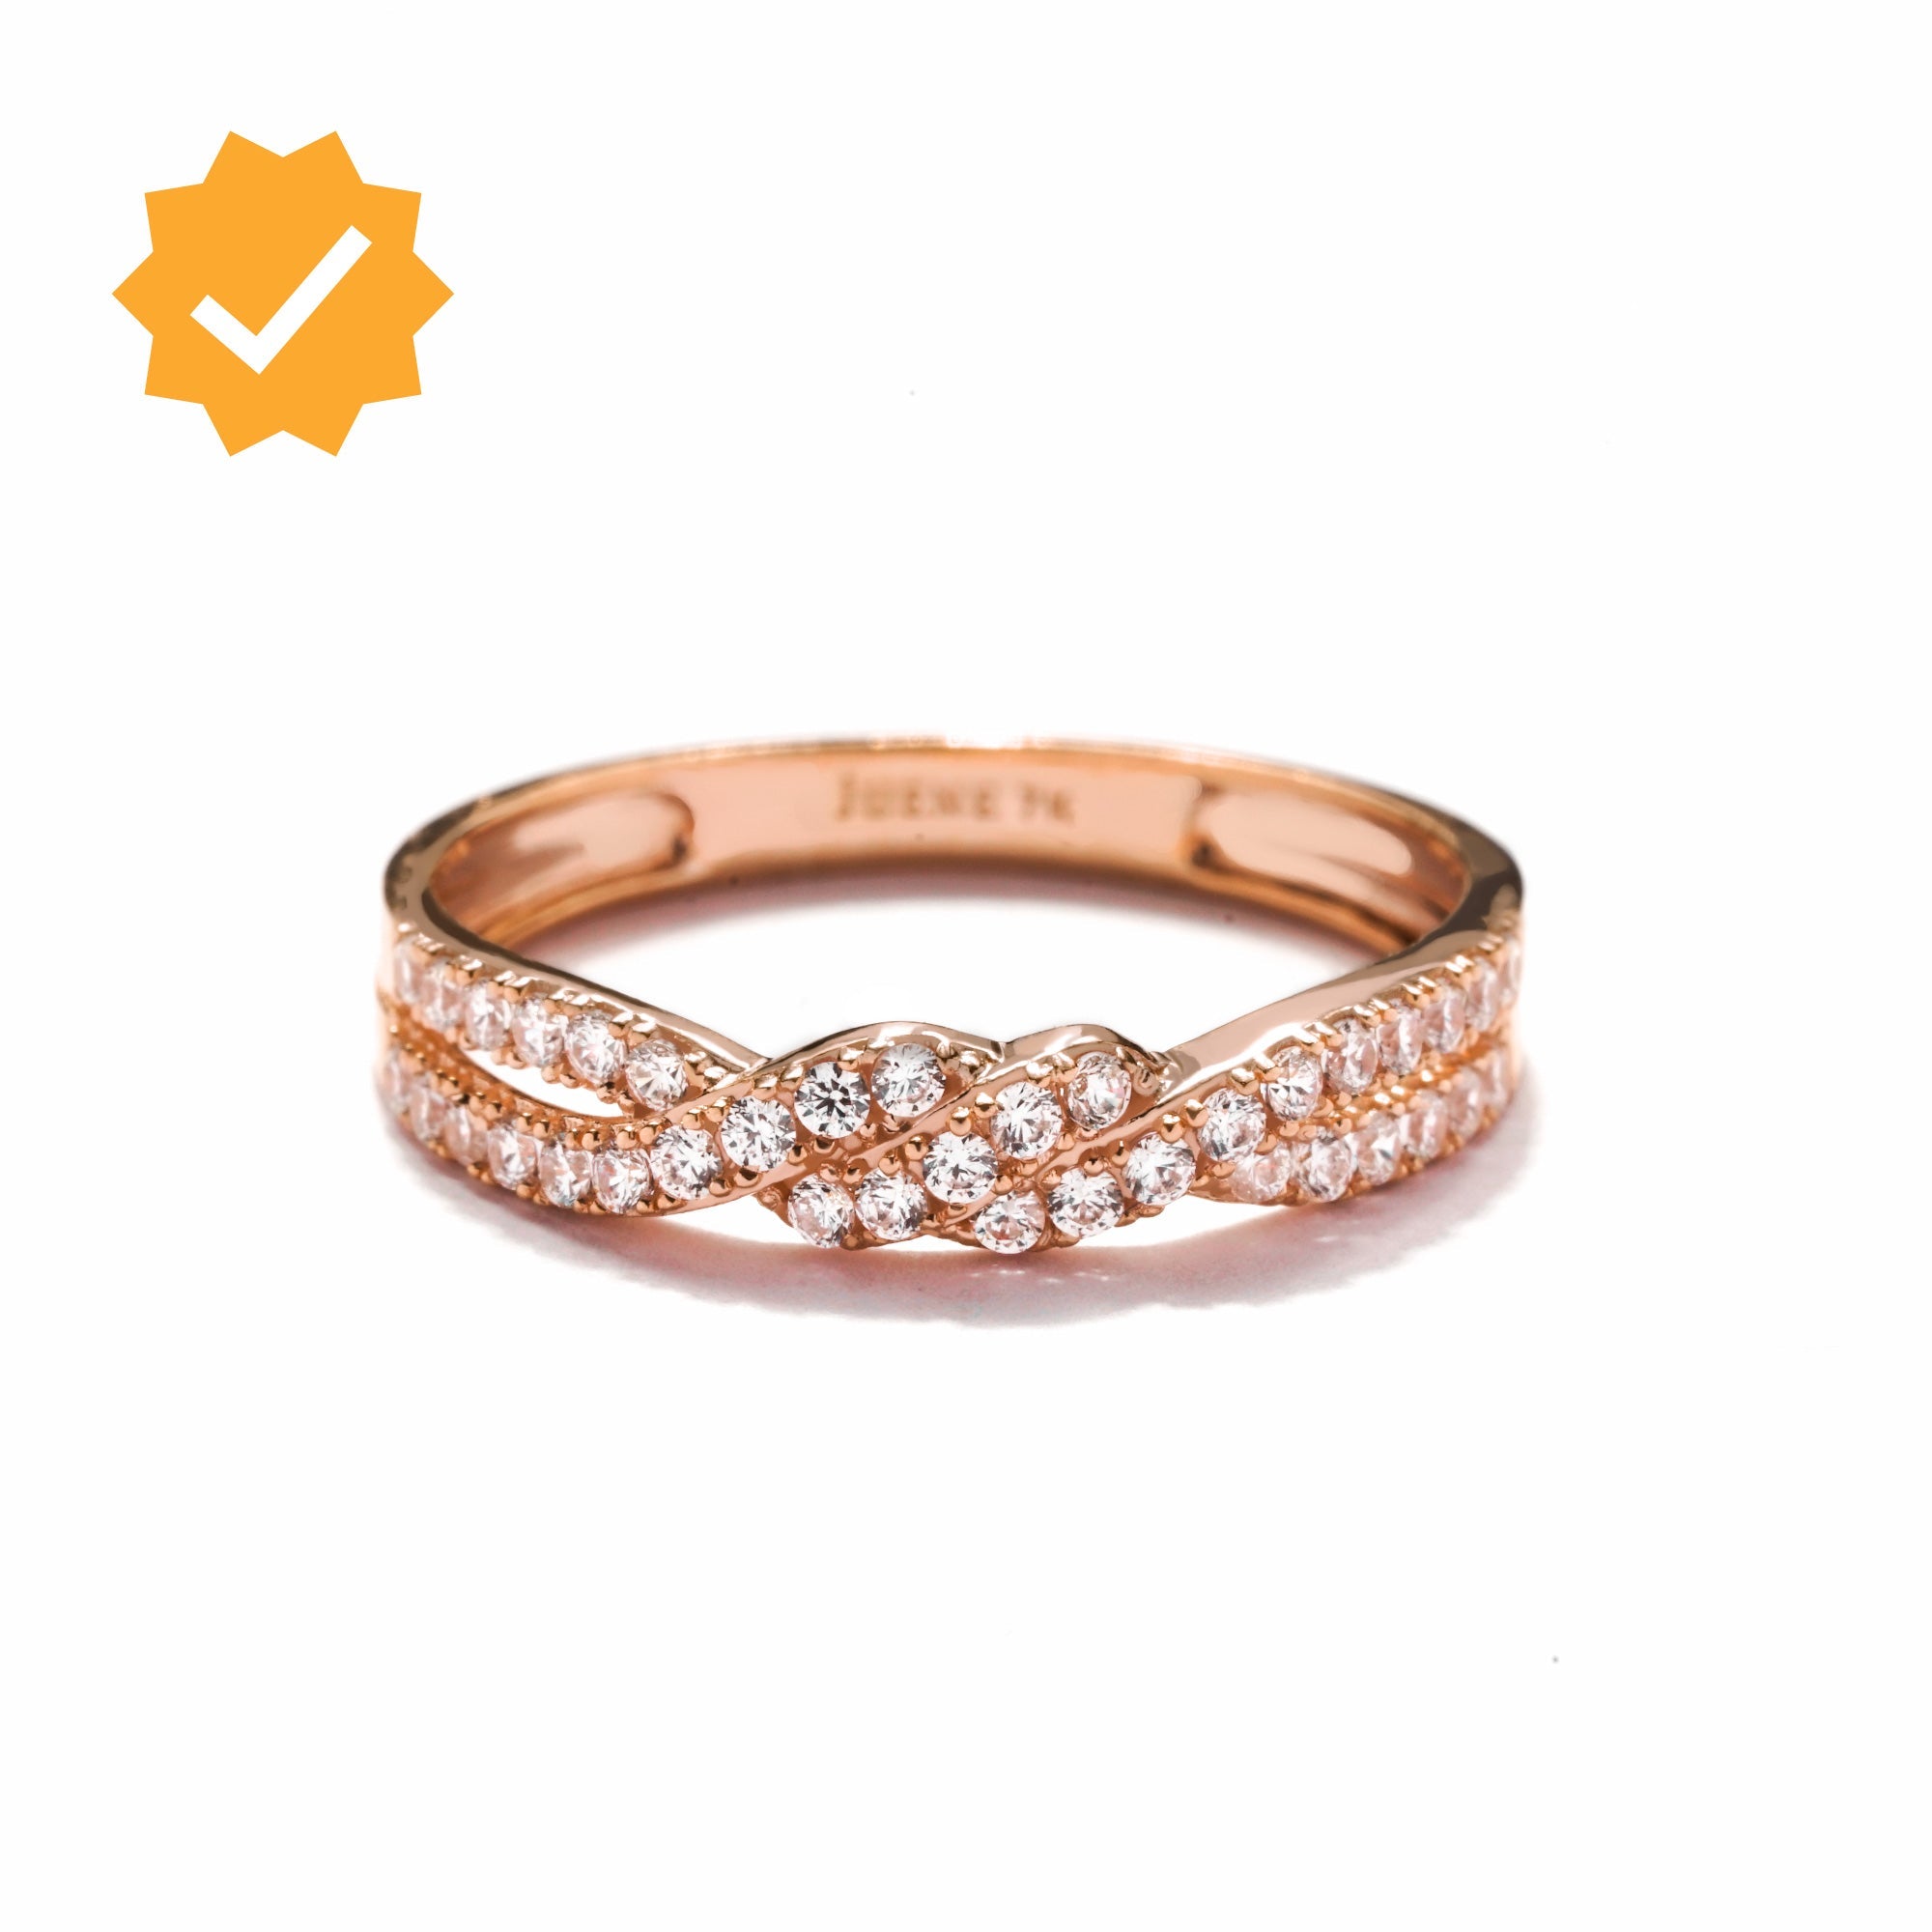 CLOUDY GOLD RING - Juene Jewelry